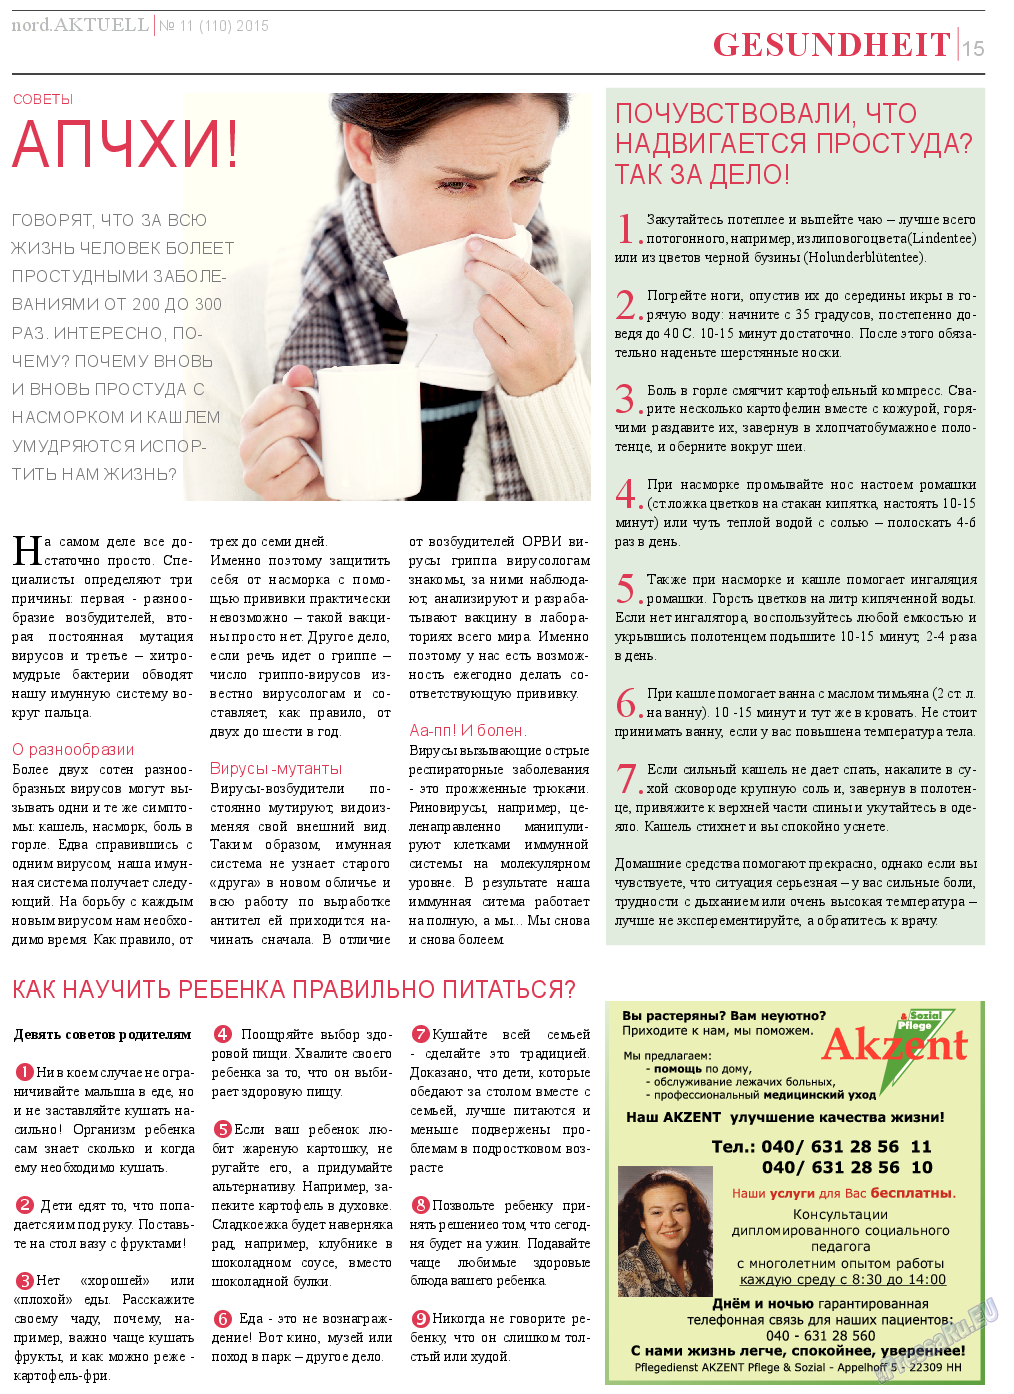 nord.Aktuell (газета). 2015 год, номер 11, стр. 15